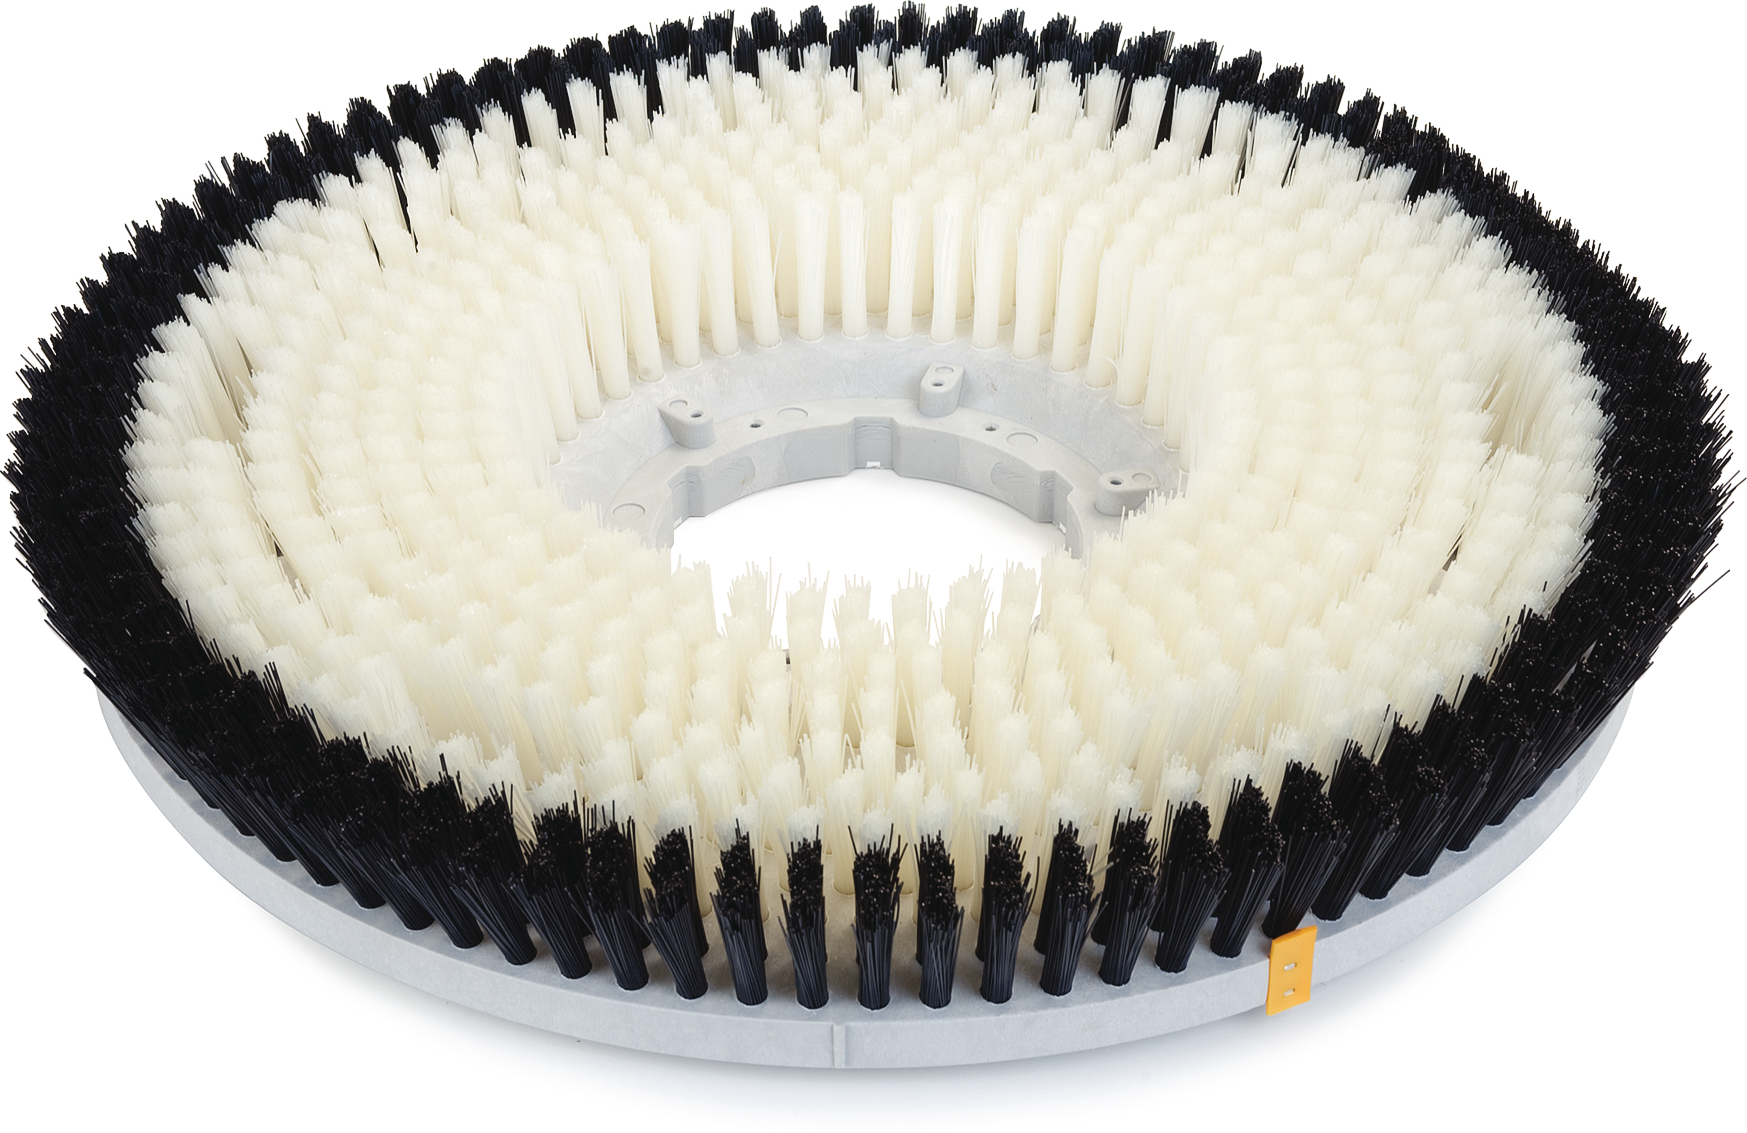 Colortech White-Black Karpet Kare Nylon Brush 11 - White-Black